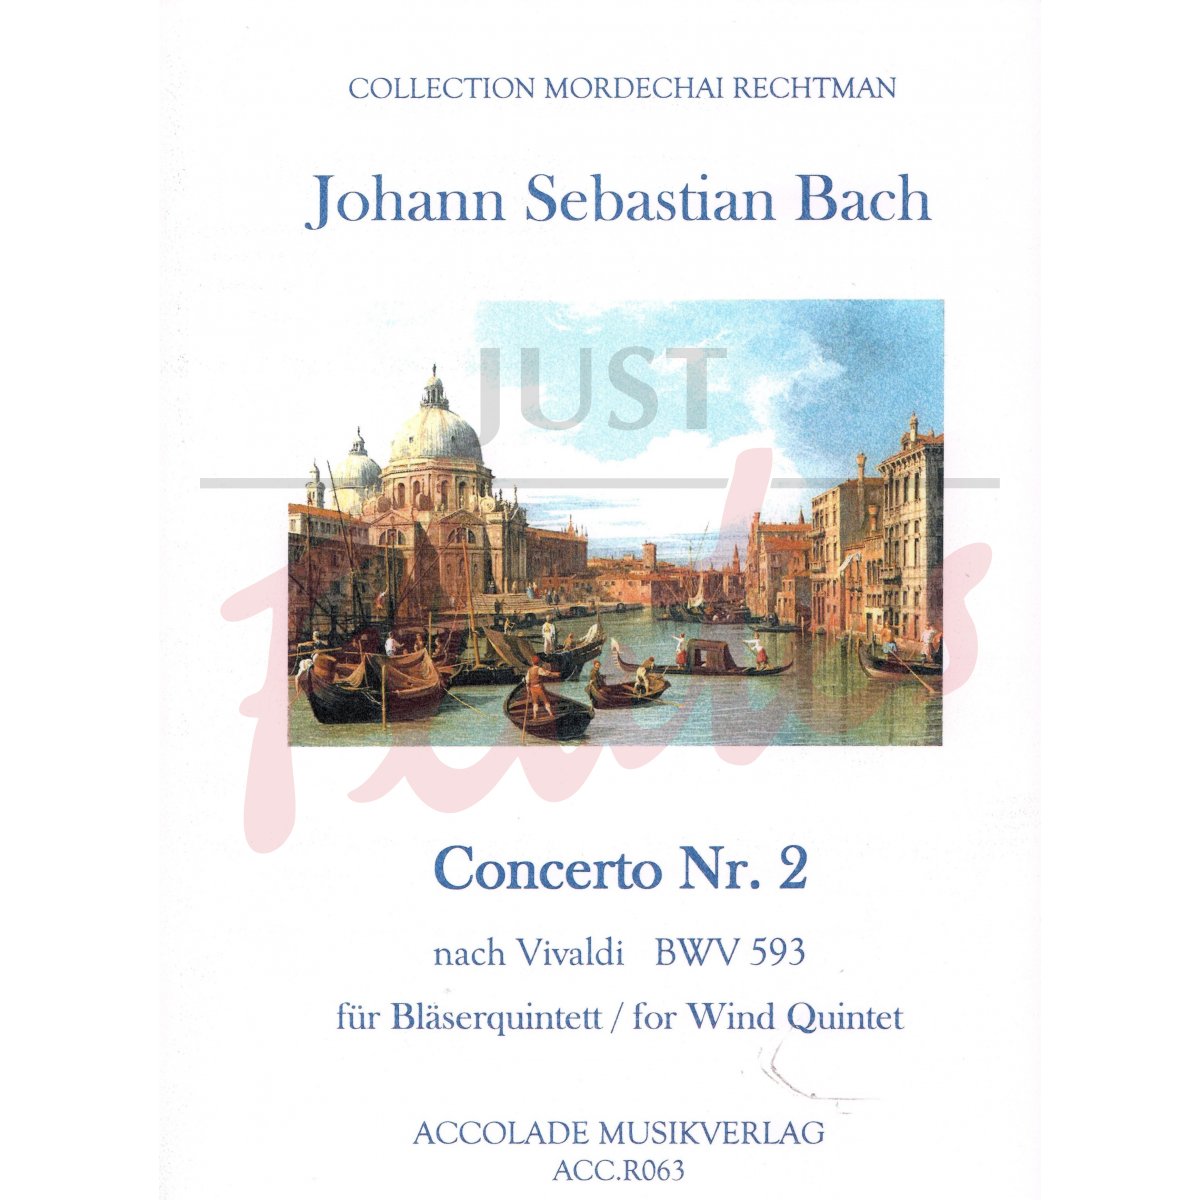 Concerto No 2 in D minor (after Vivaldi) for Wind Quintet